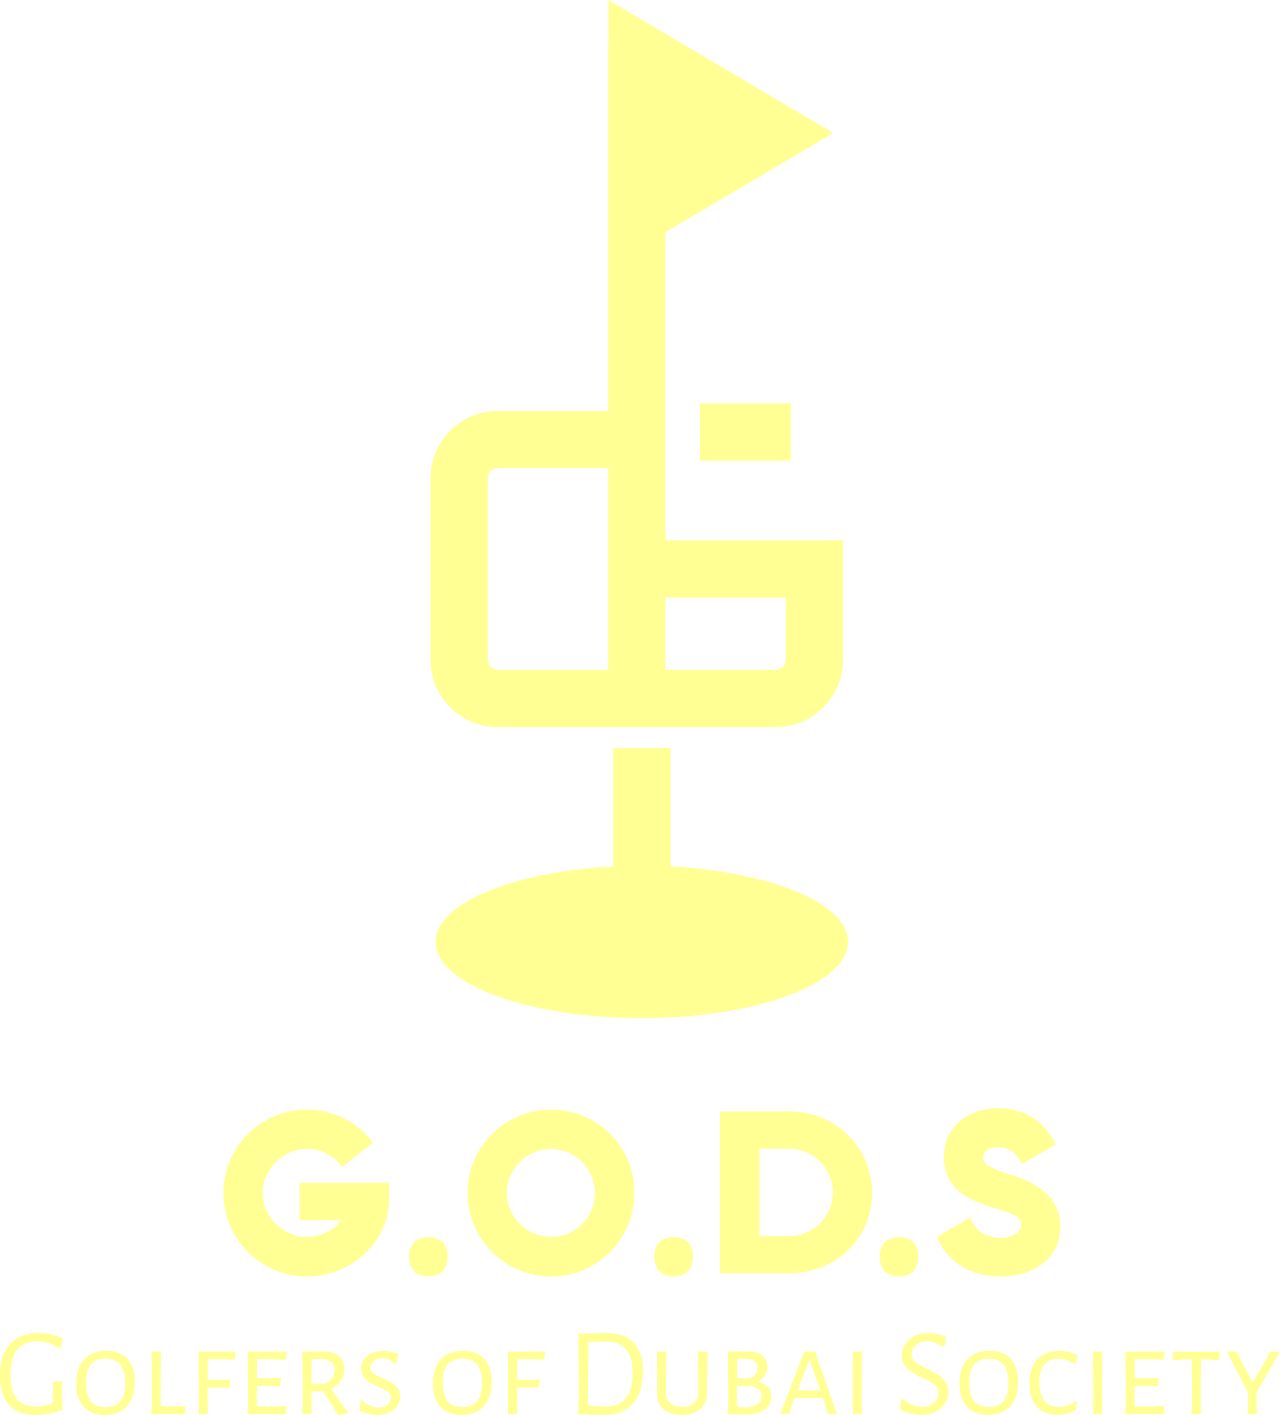 G.O.D.S's web page